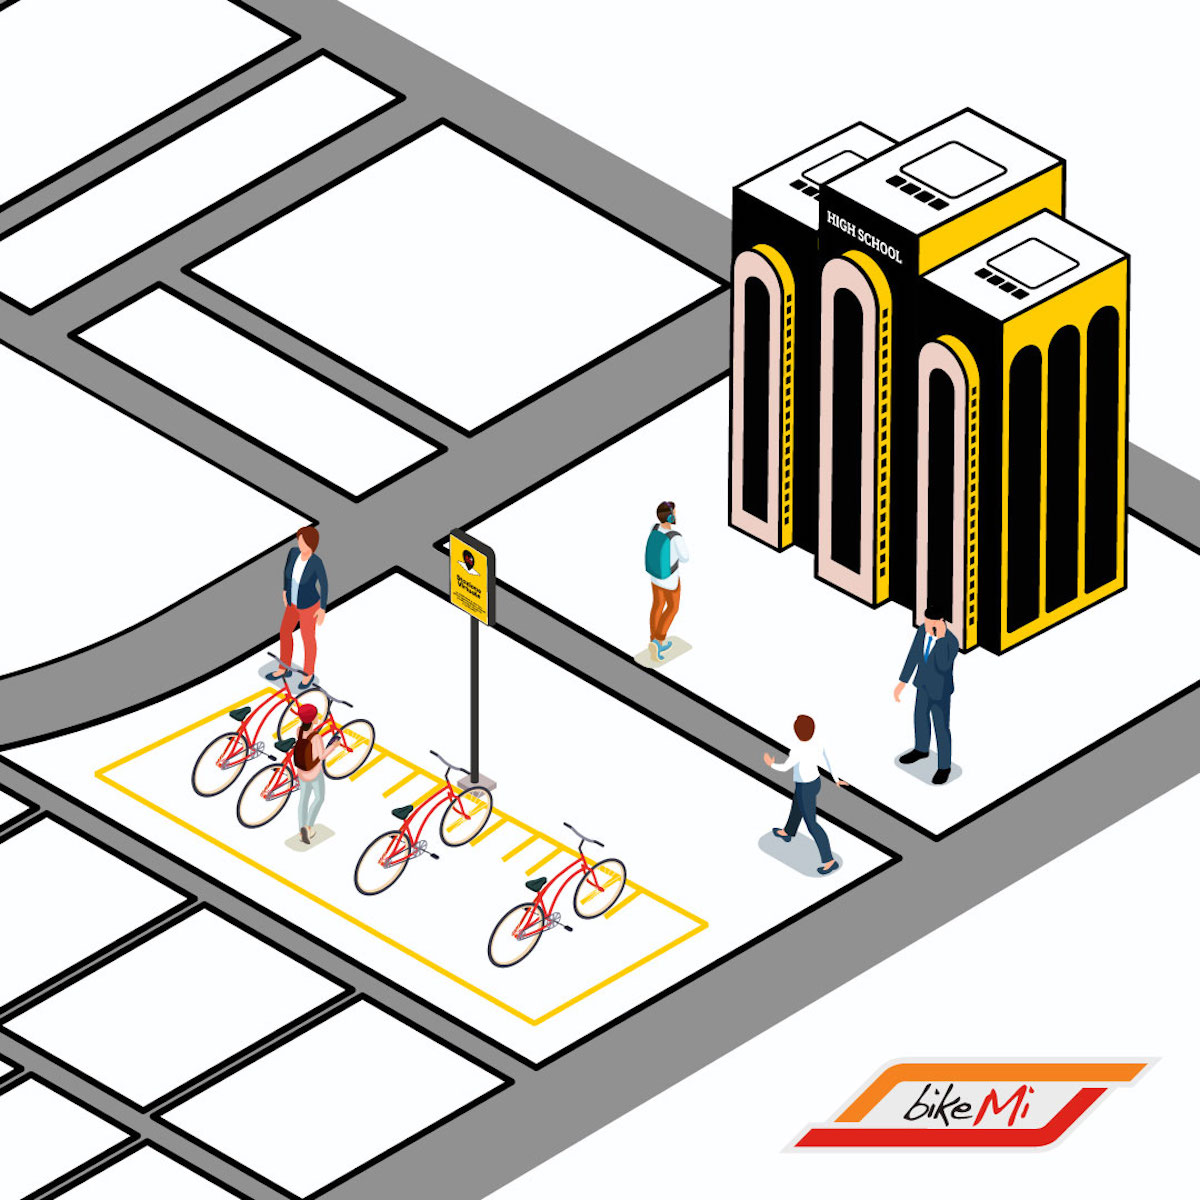 BikeMi, il bike sharing virtuale